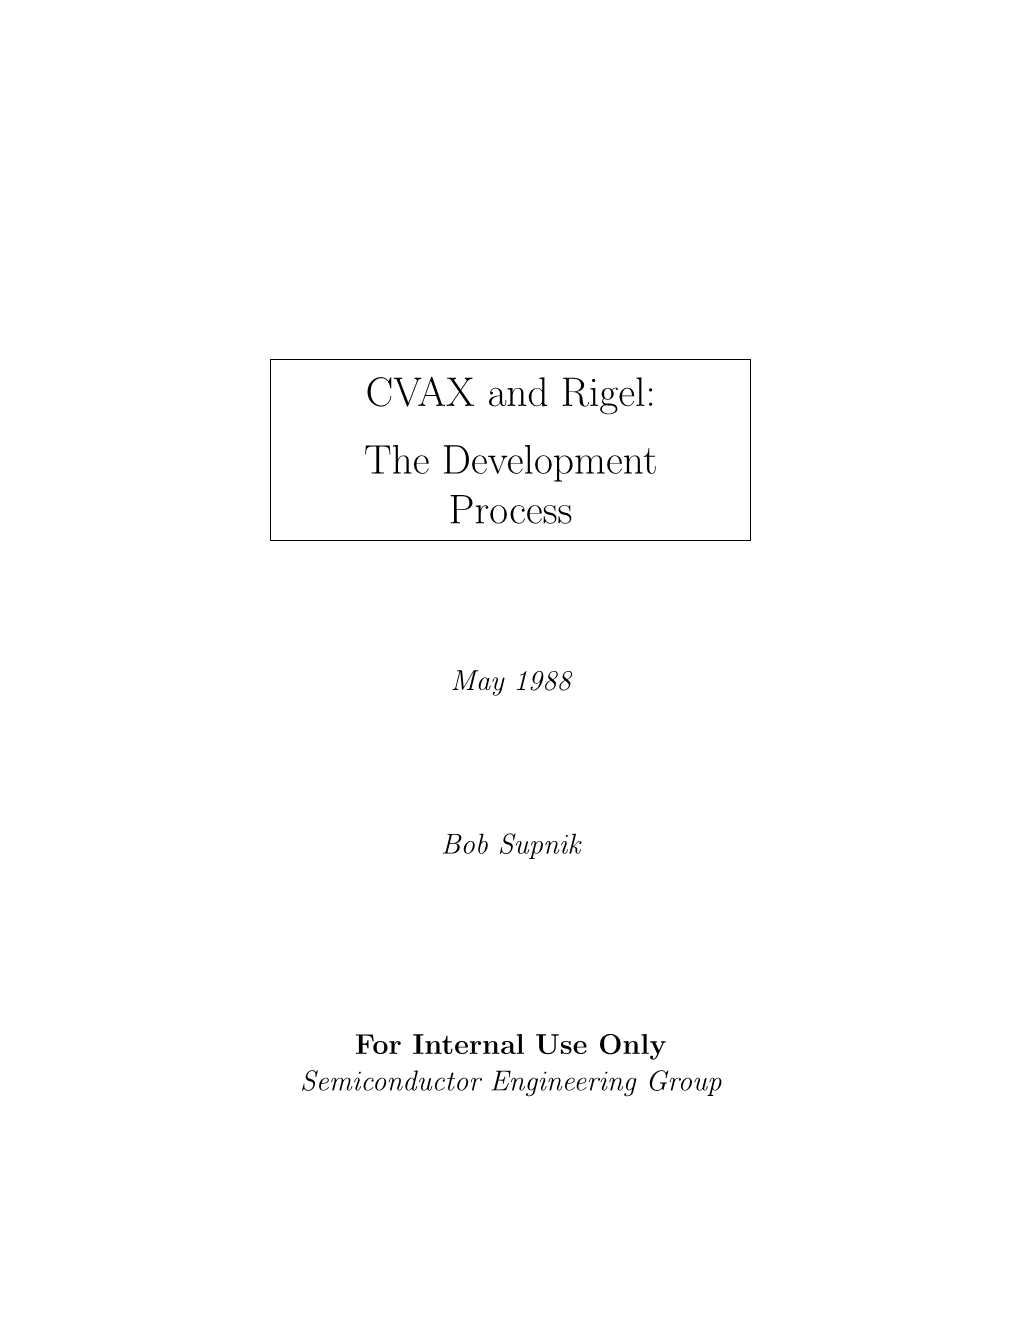 CVAX and Rigel: the Development Process